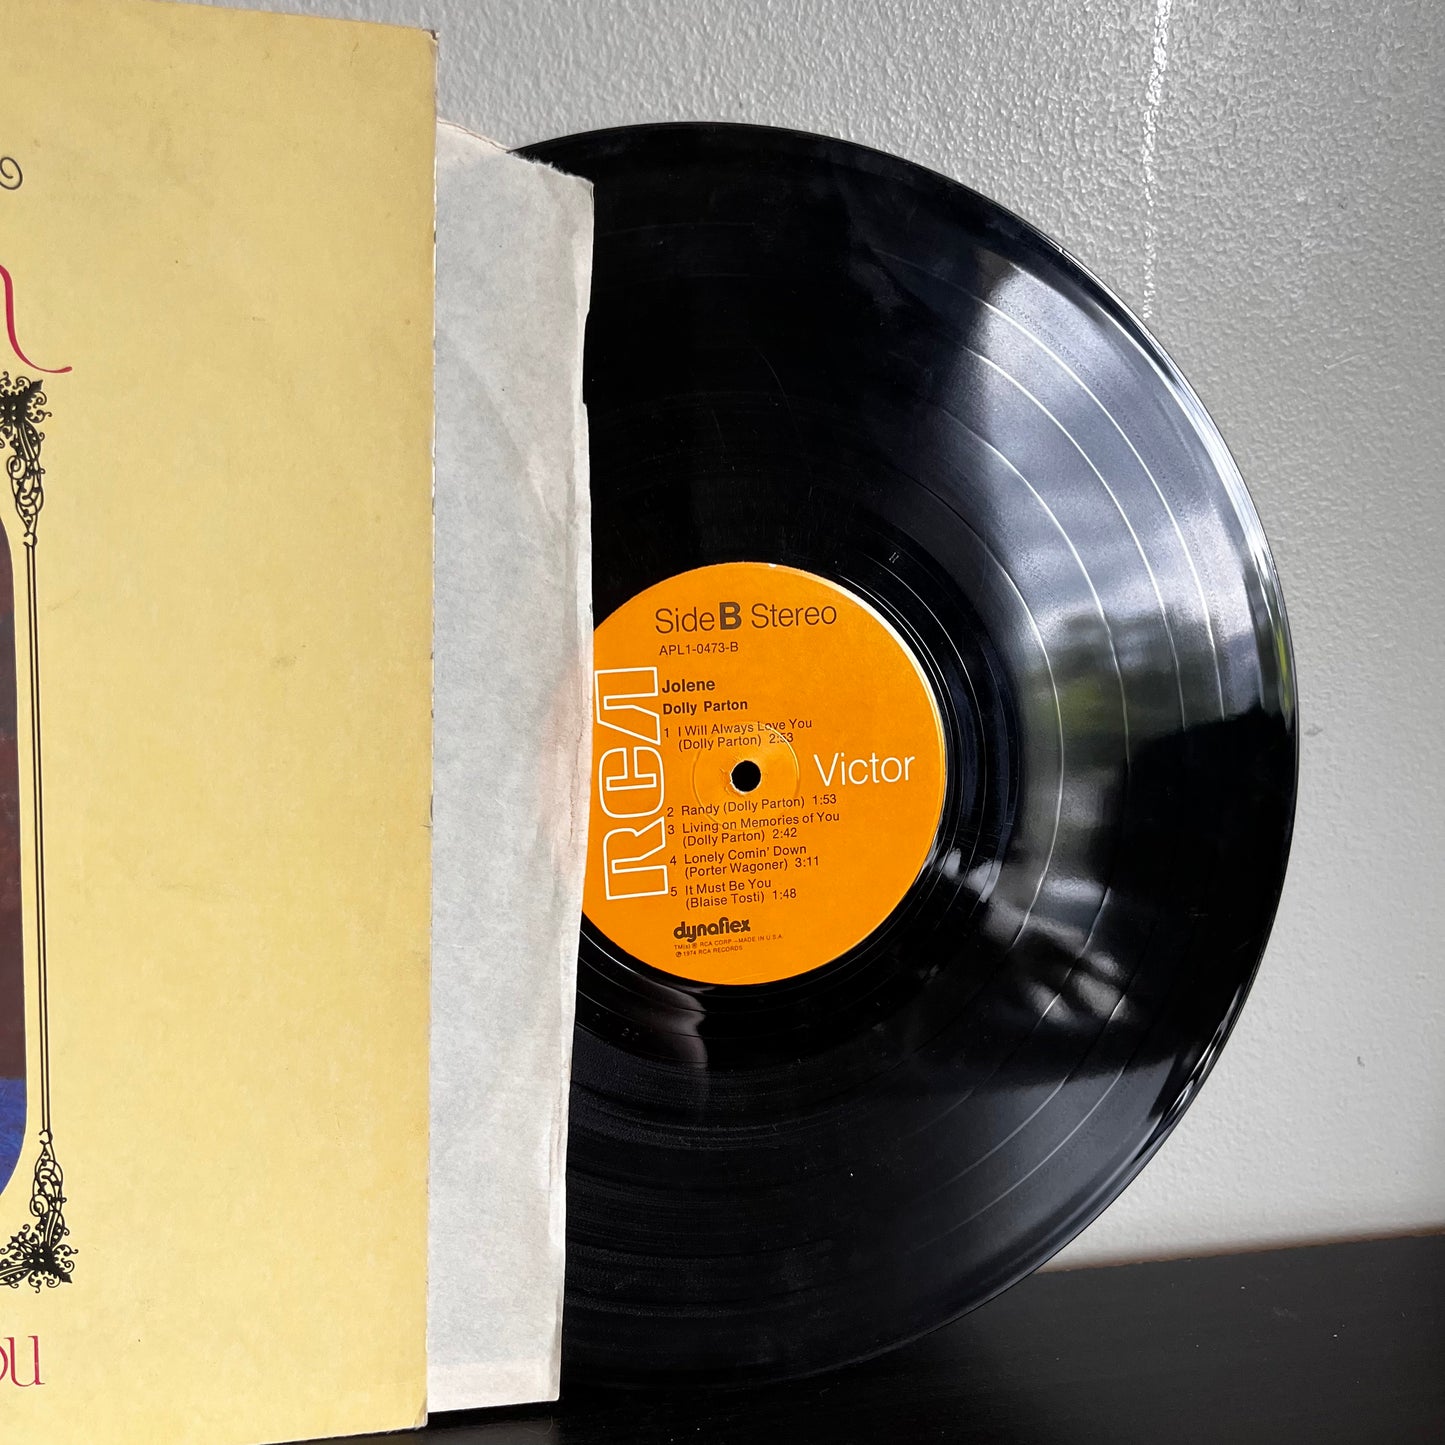 Jolene - Dolly Parton RCA APL1-0473 Used Vinyl G+ 1974 Indianapolis Pressing Orange Label